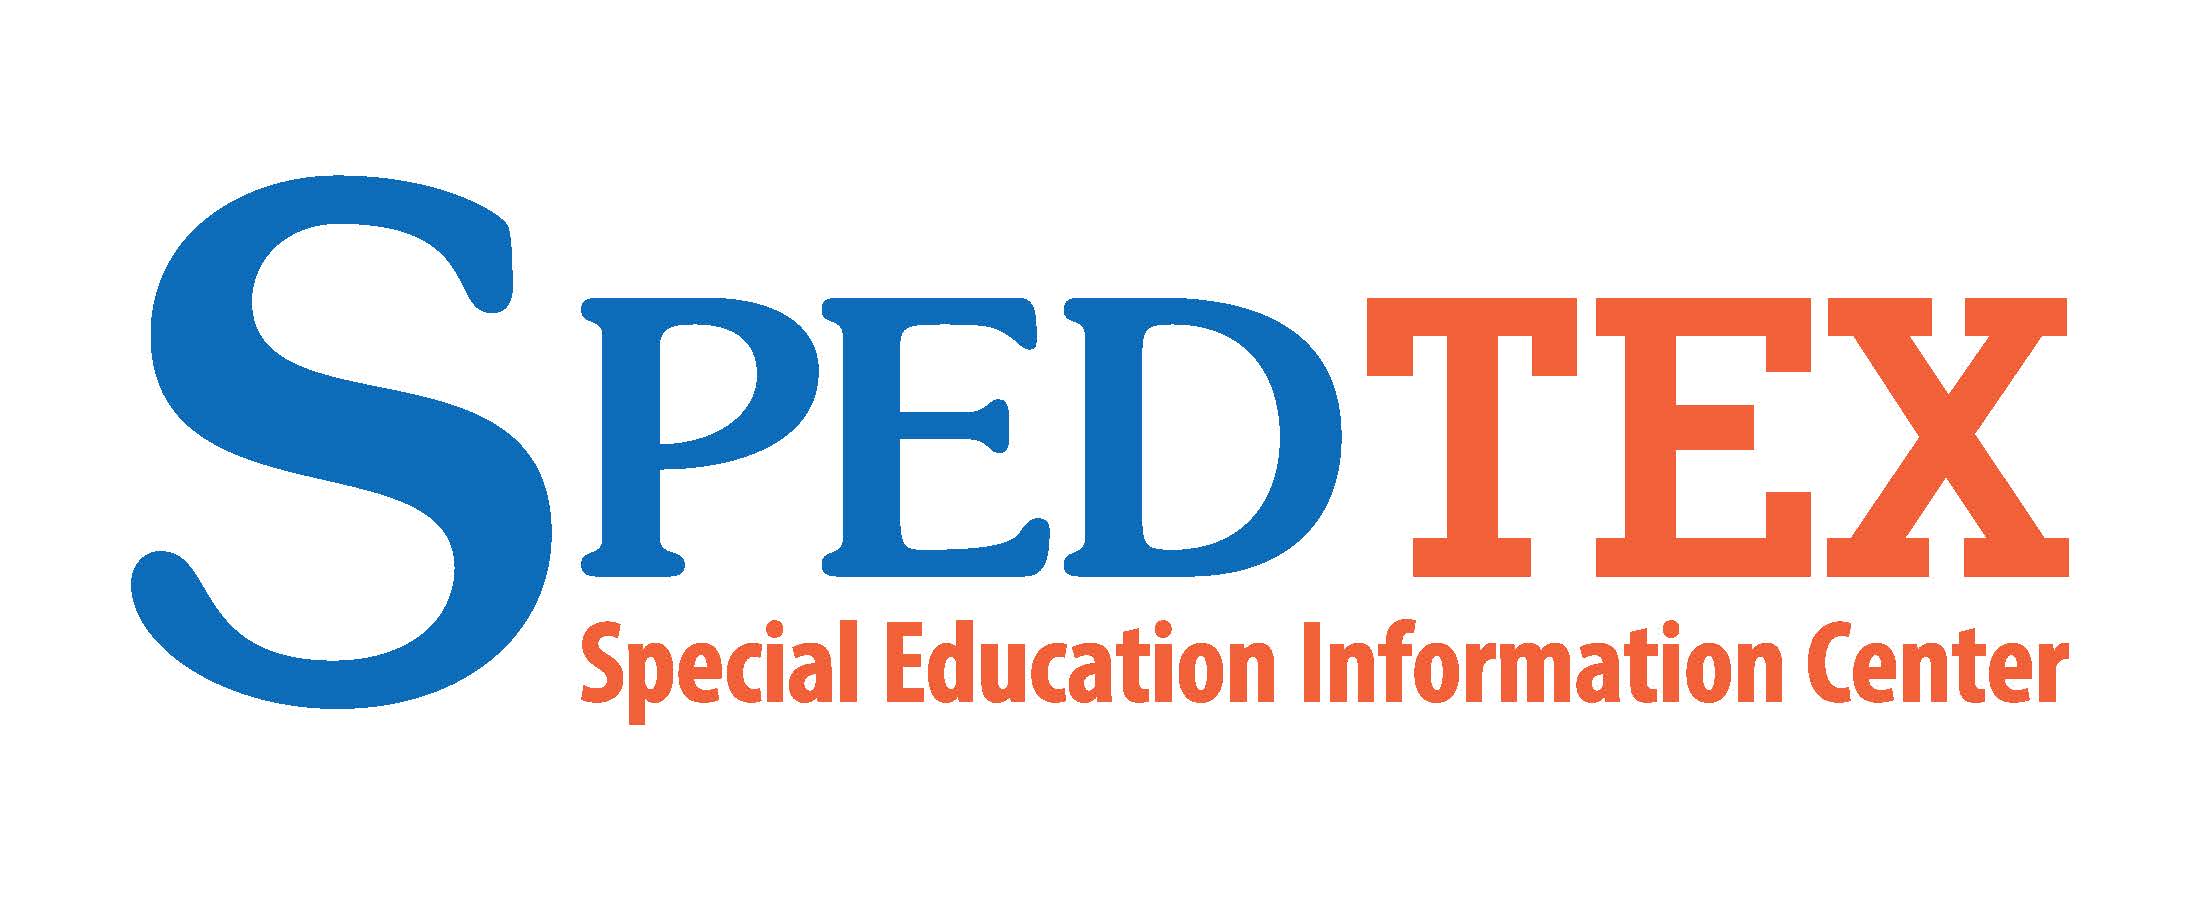 Texas Special Education Information Center